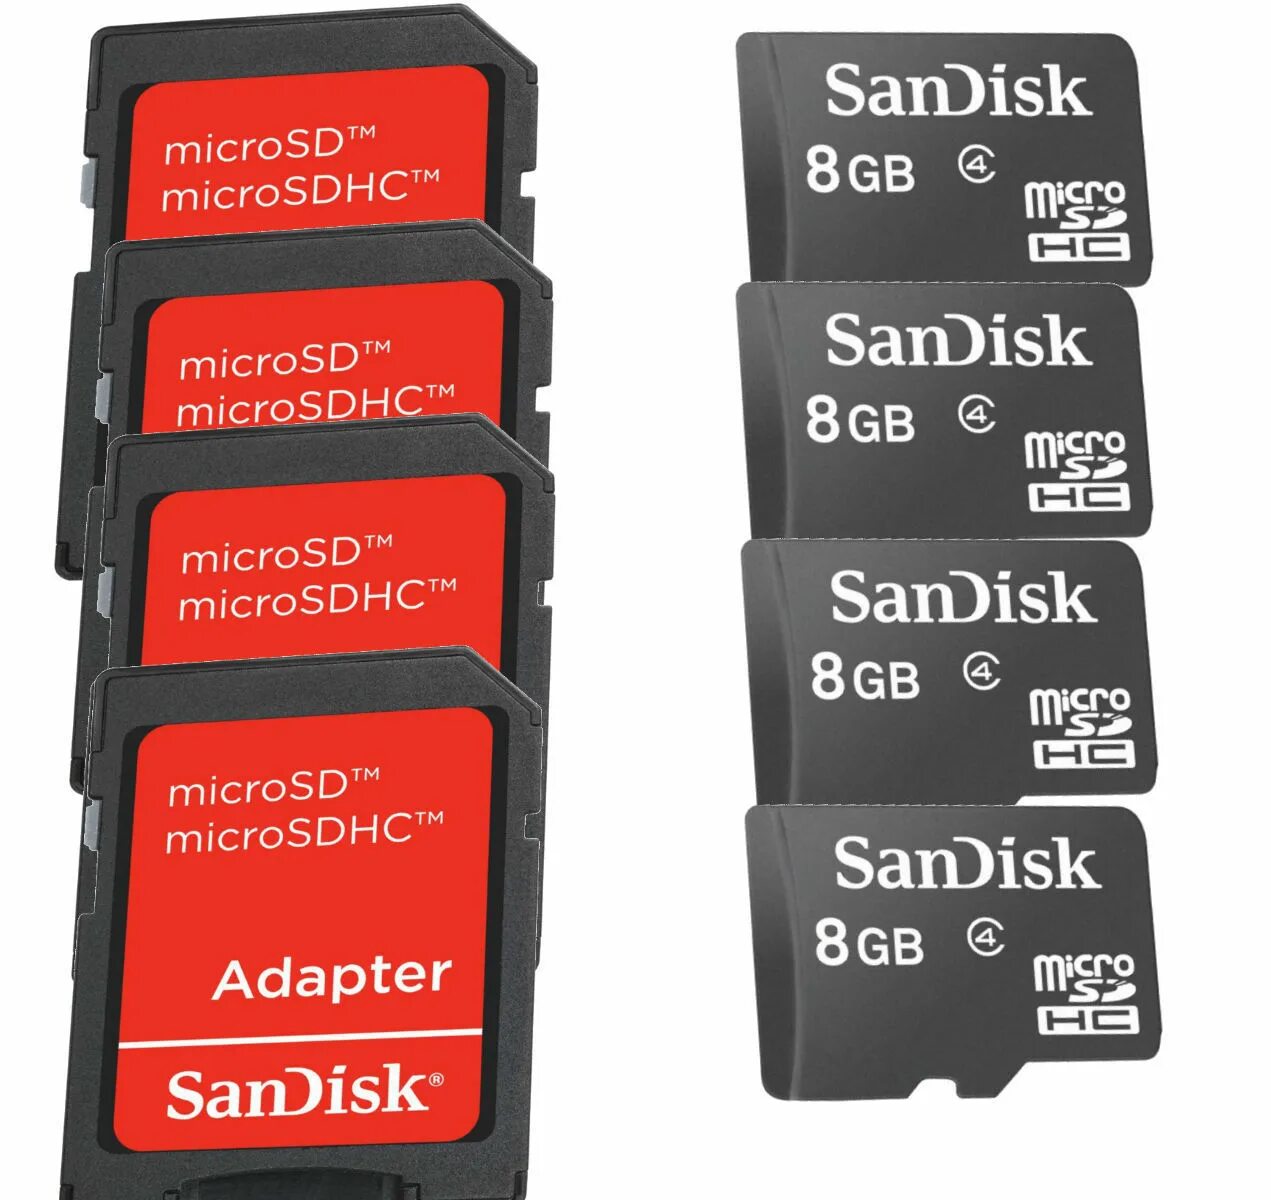 Sandisk купить карту. SANDISK MICROSD 8gb. MICROSDHC Card 8gb. САНДИСК 8 ГБ карта памяти. Микро карта памяти 8гб 4 класс САНДИСК.